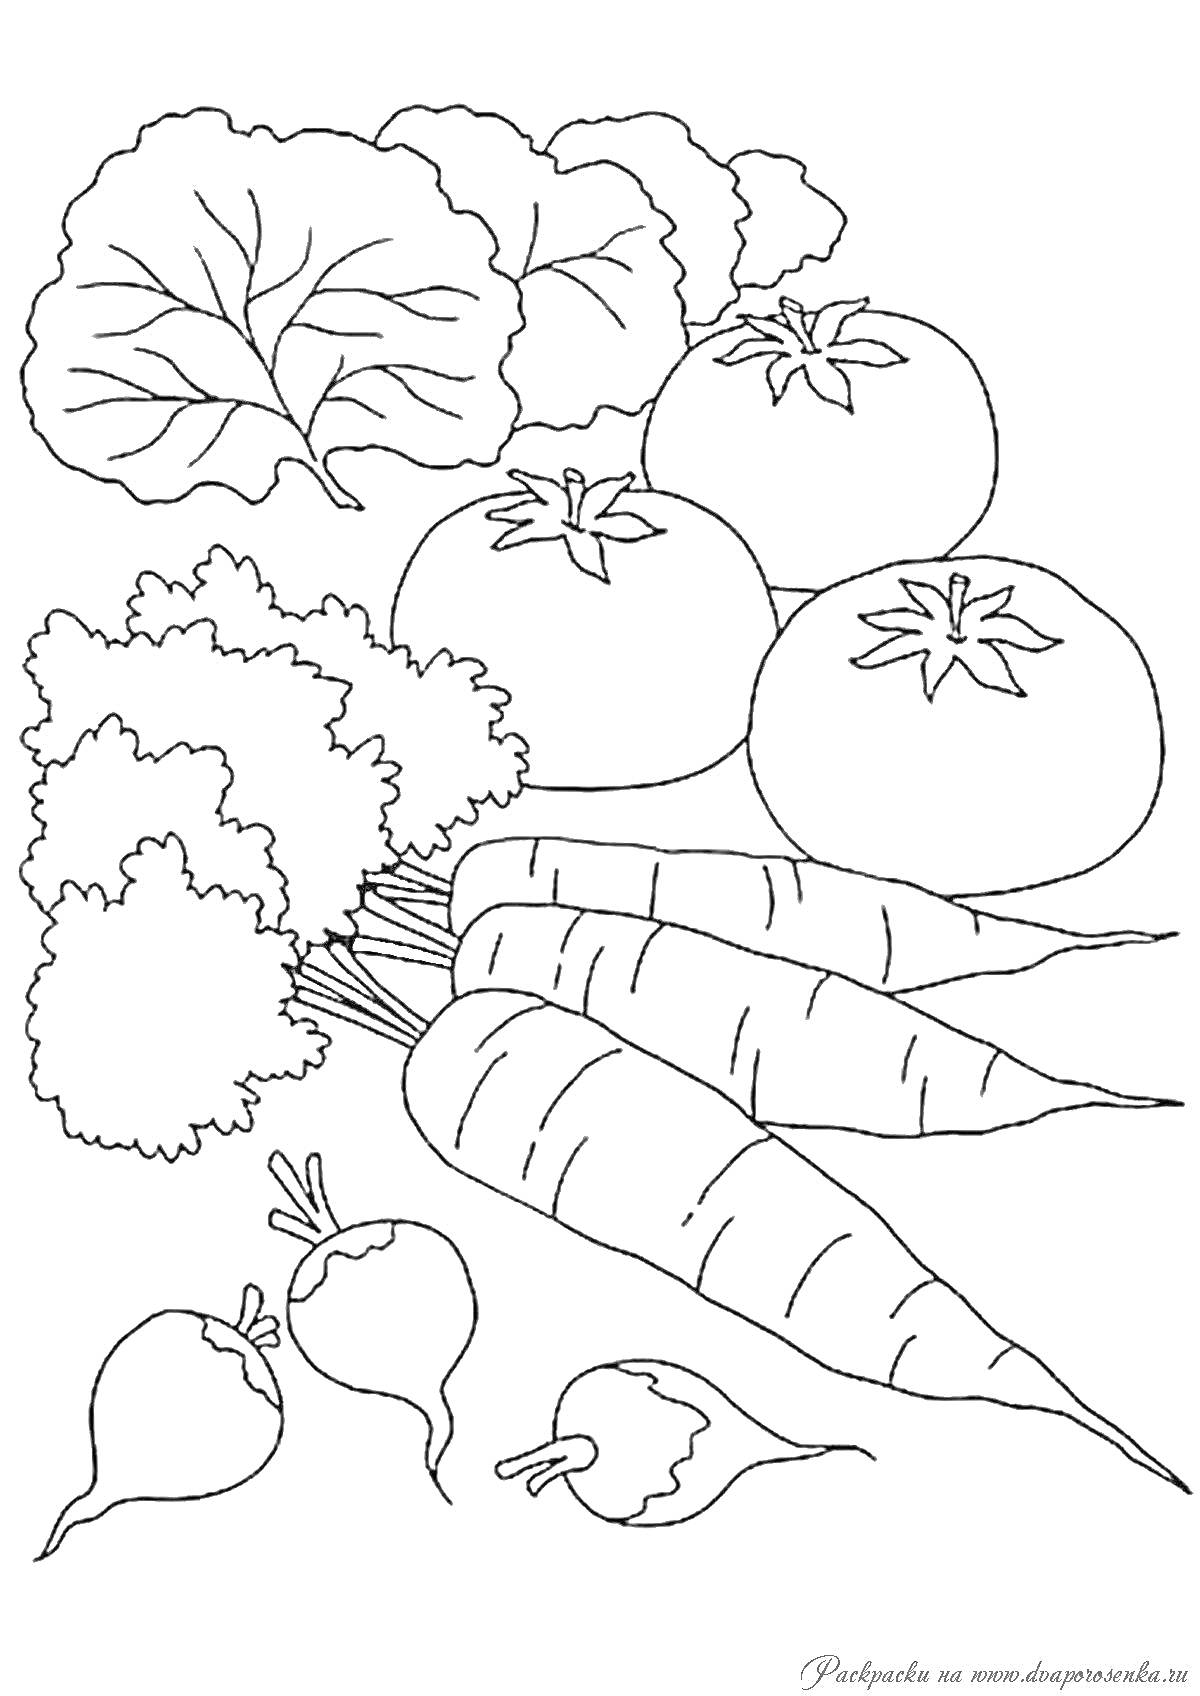 На раскраске изображено: Овощи, Капуста, Петрушка, Морковь, Редька, Для детей, 3-4 года, Обучение, Еда